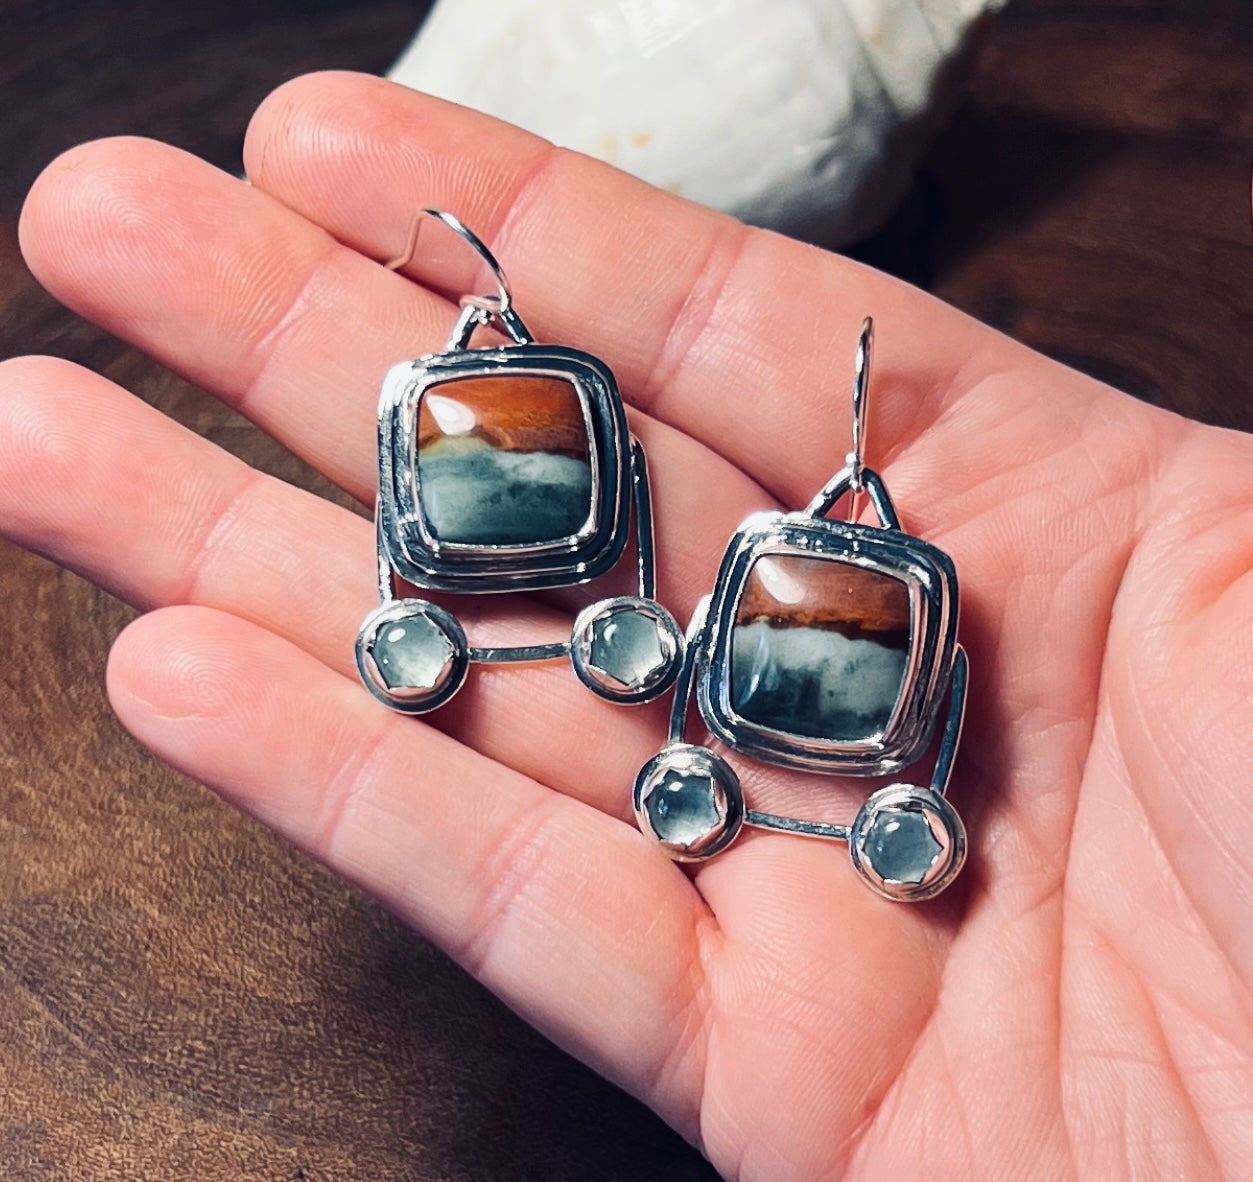 Polychrome Jasper and Aquamarine sterling silver earrings